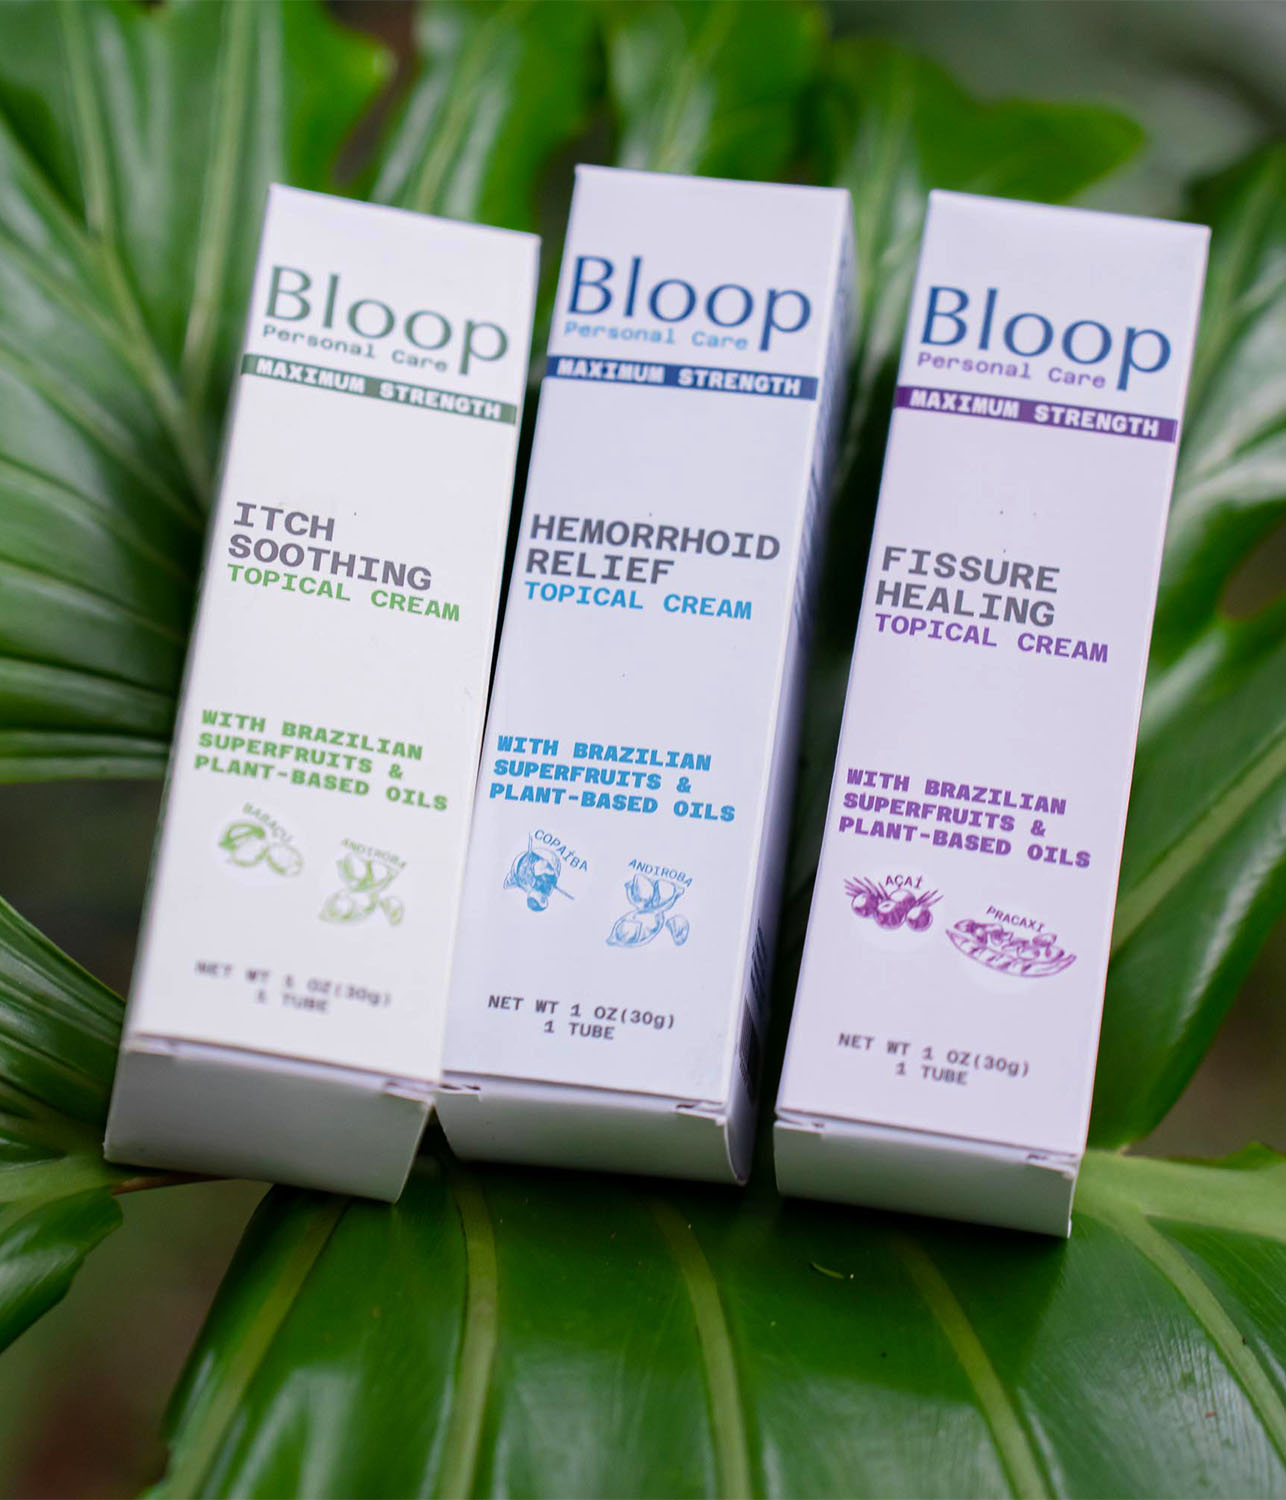 bloop 3 products together on leaf